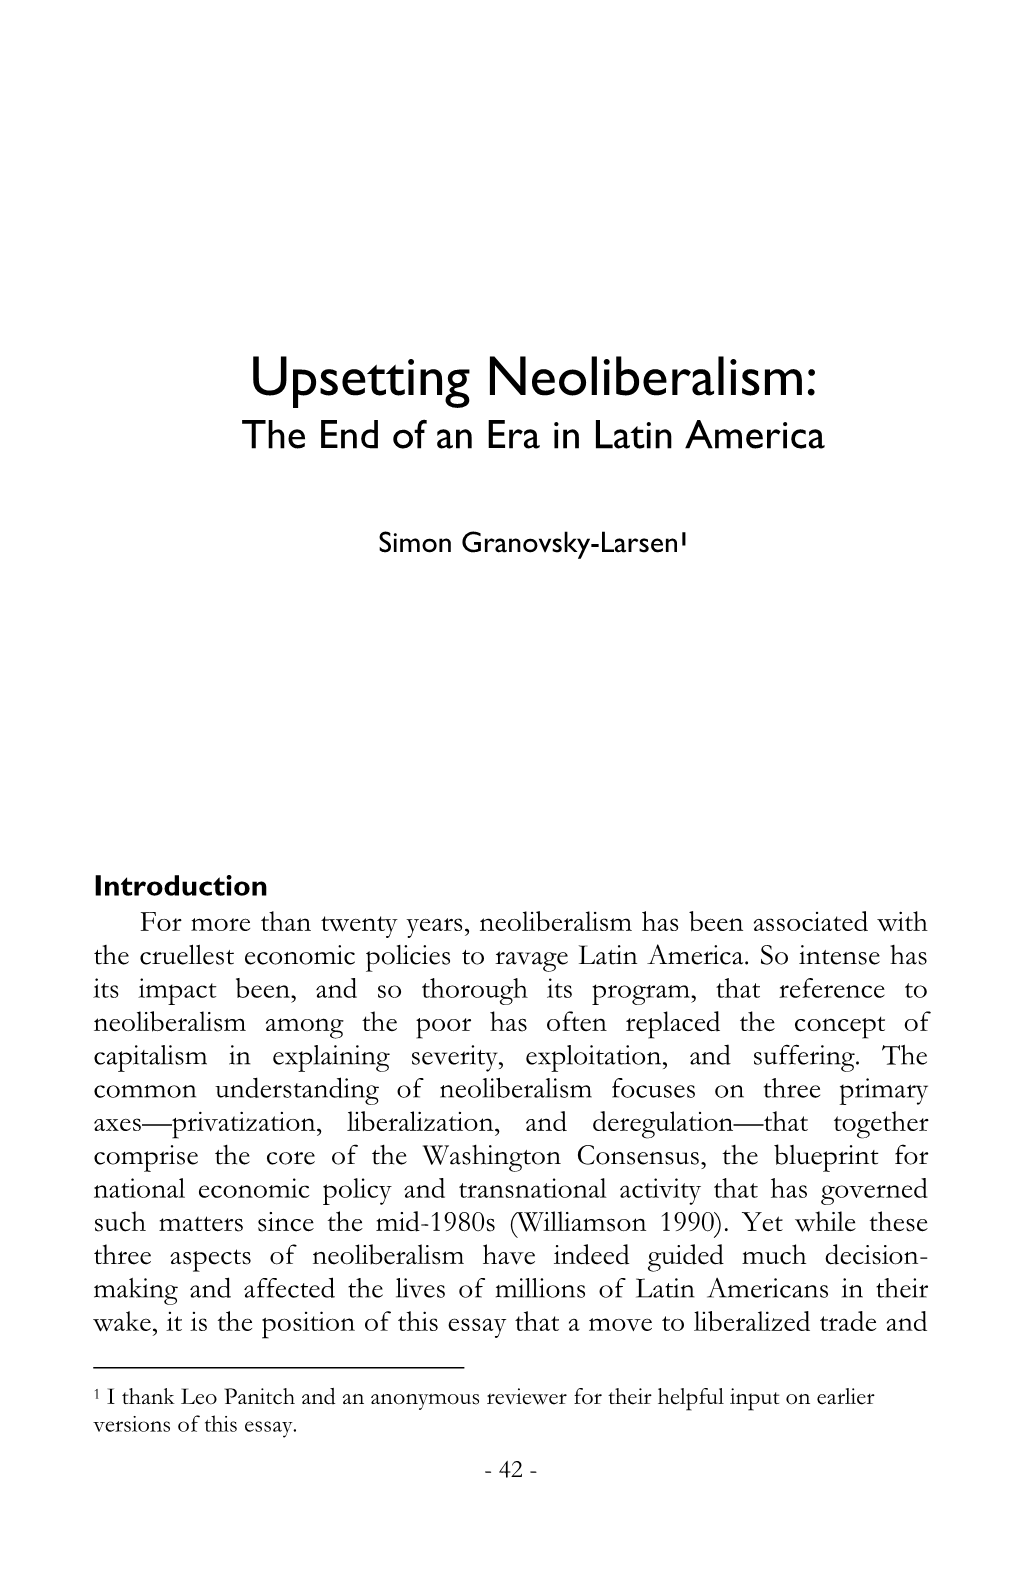 Upsetting Neoliberalism: the End of an Era in Latin America